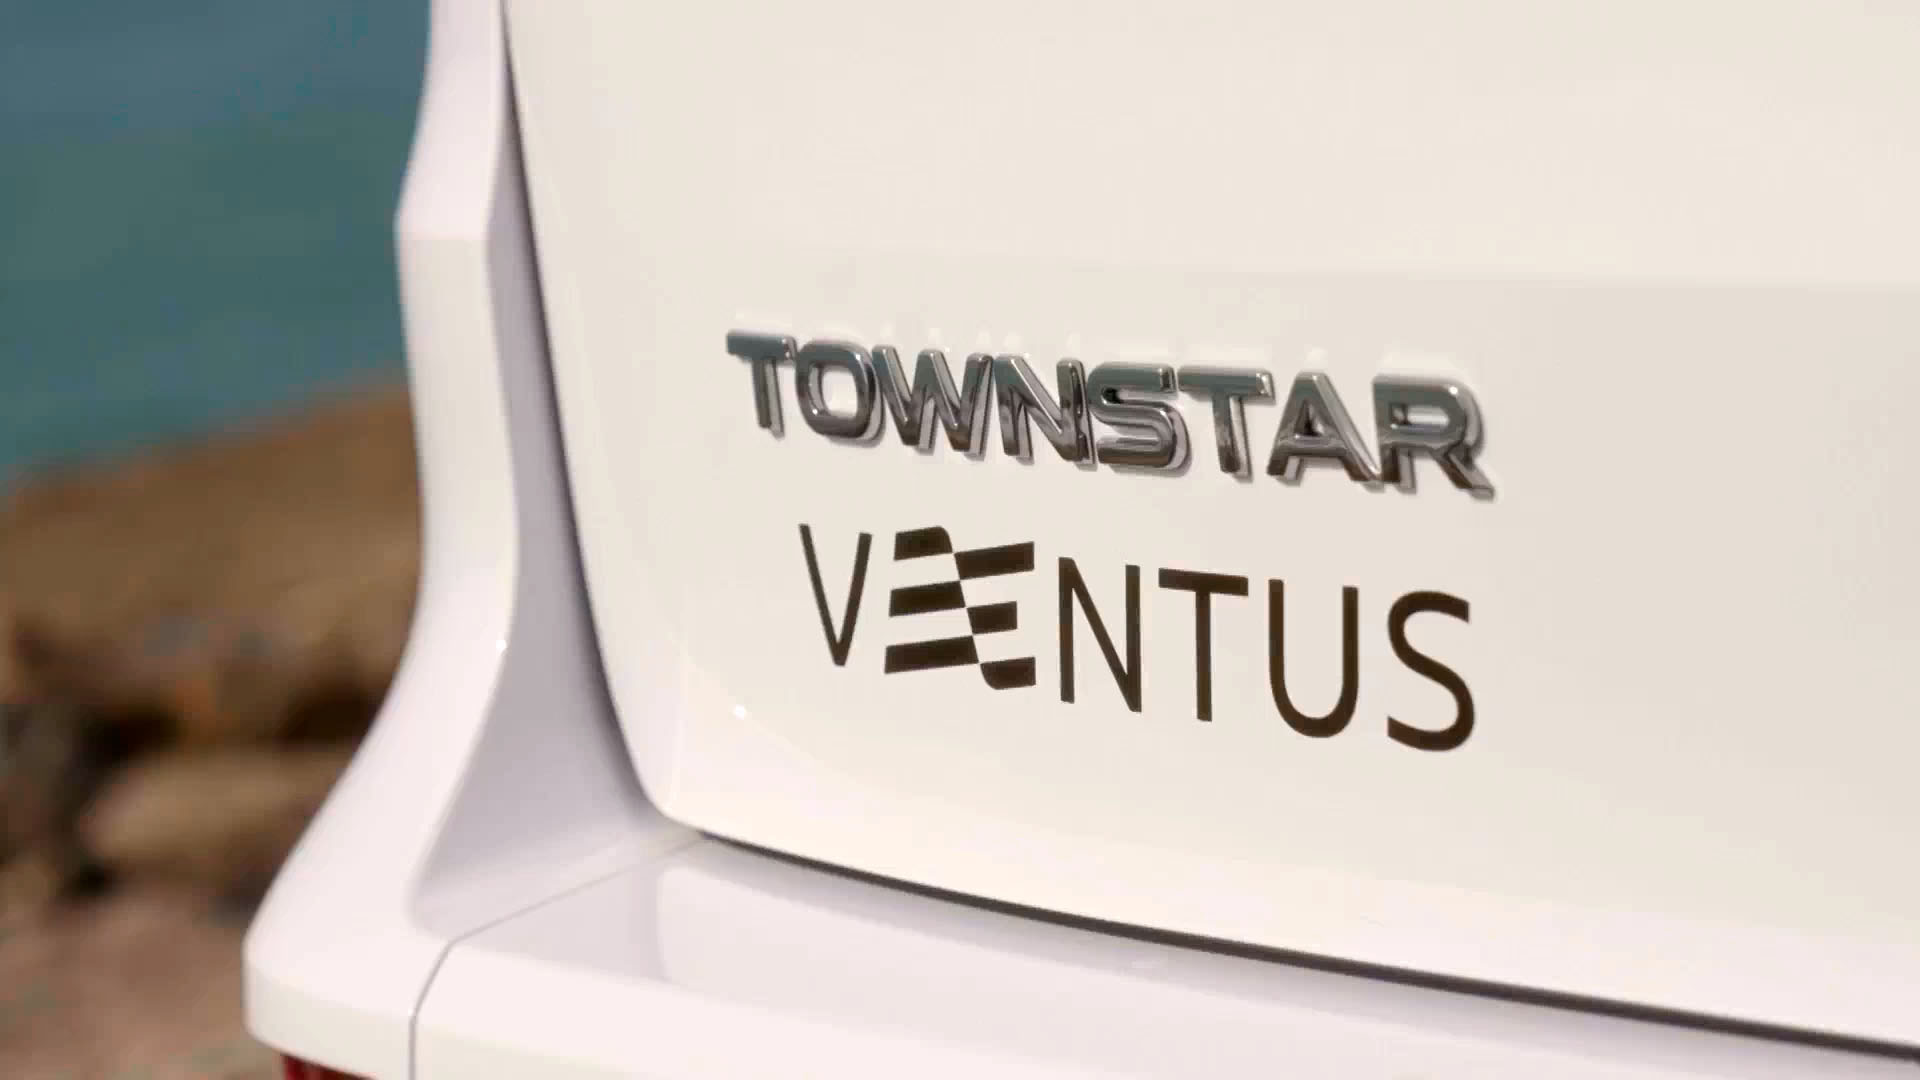 Townstar Ventus logo